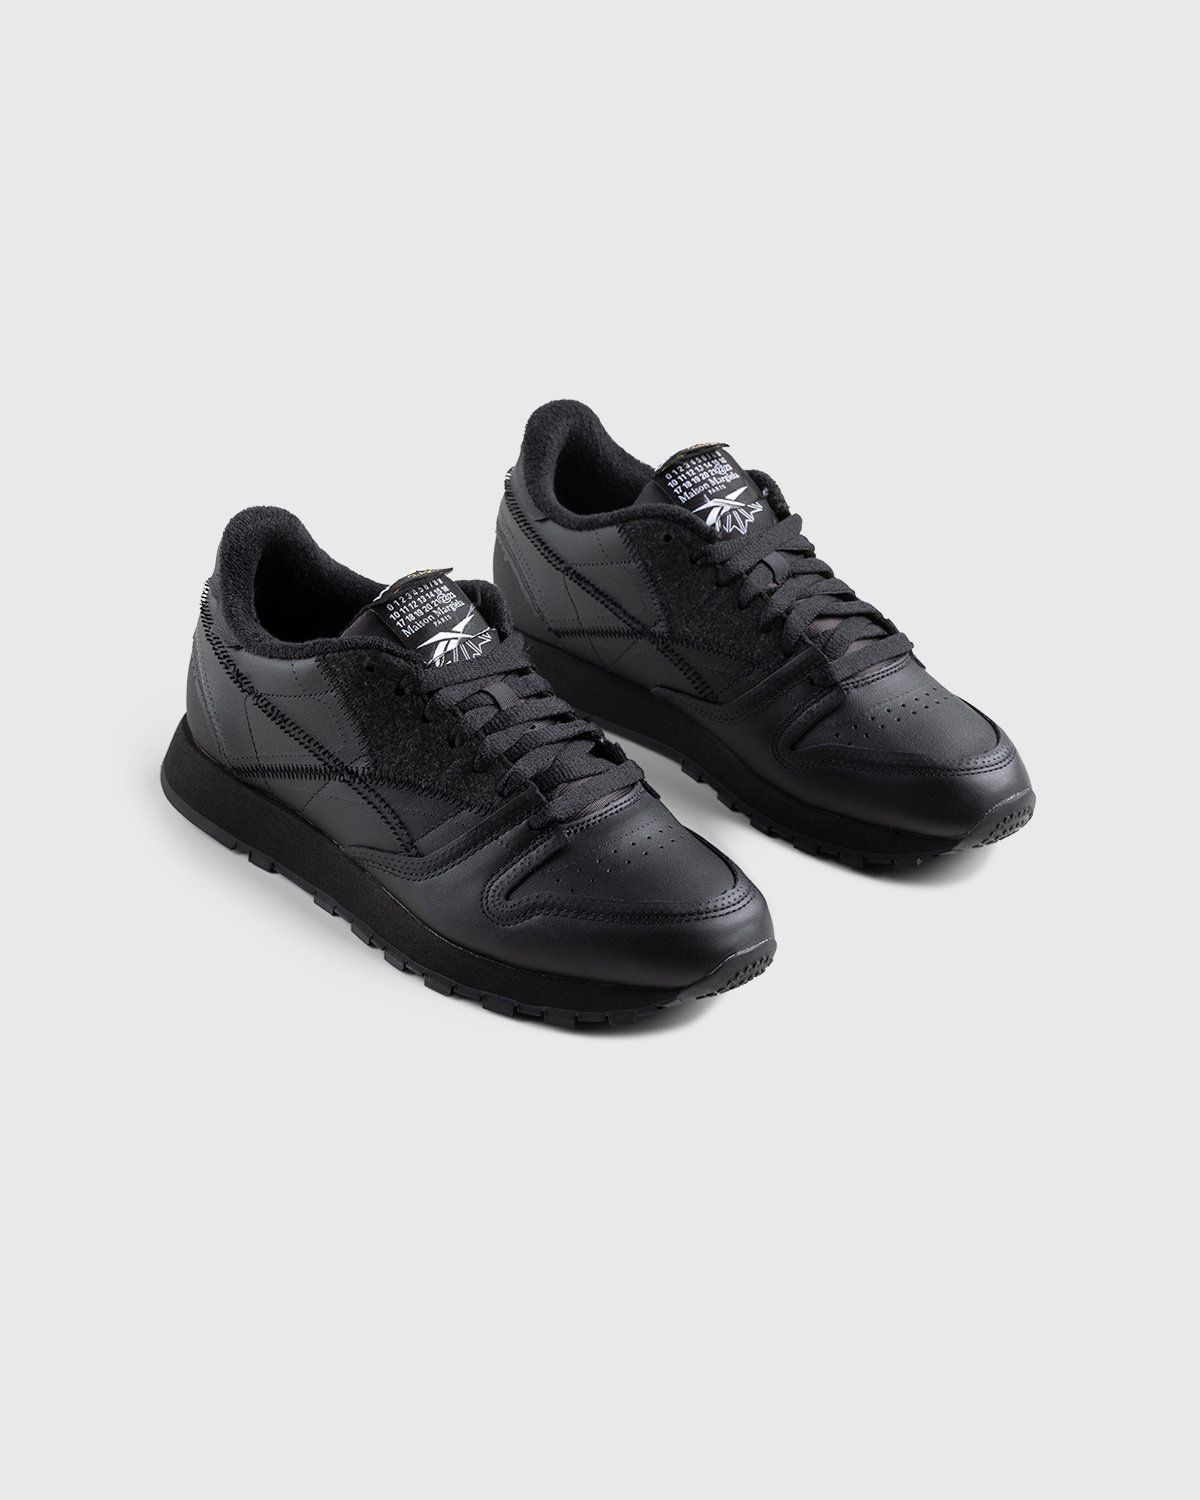 Maison Margiela x Reebok – Classic Leather Memory Of Black/Footwear White/Black - Sneakers - Black - Image 4